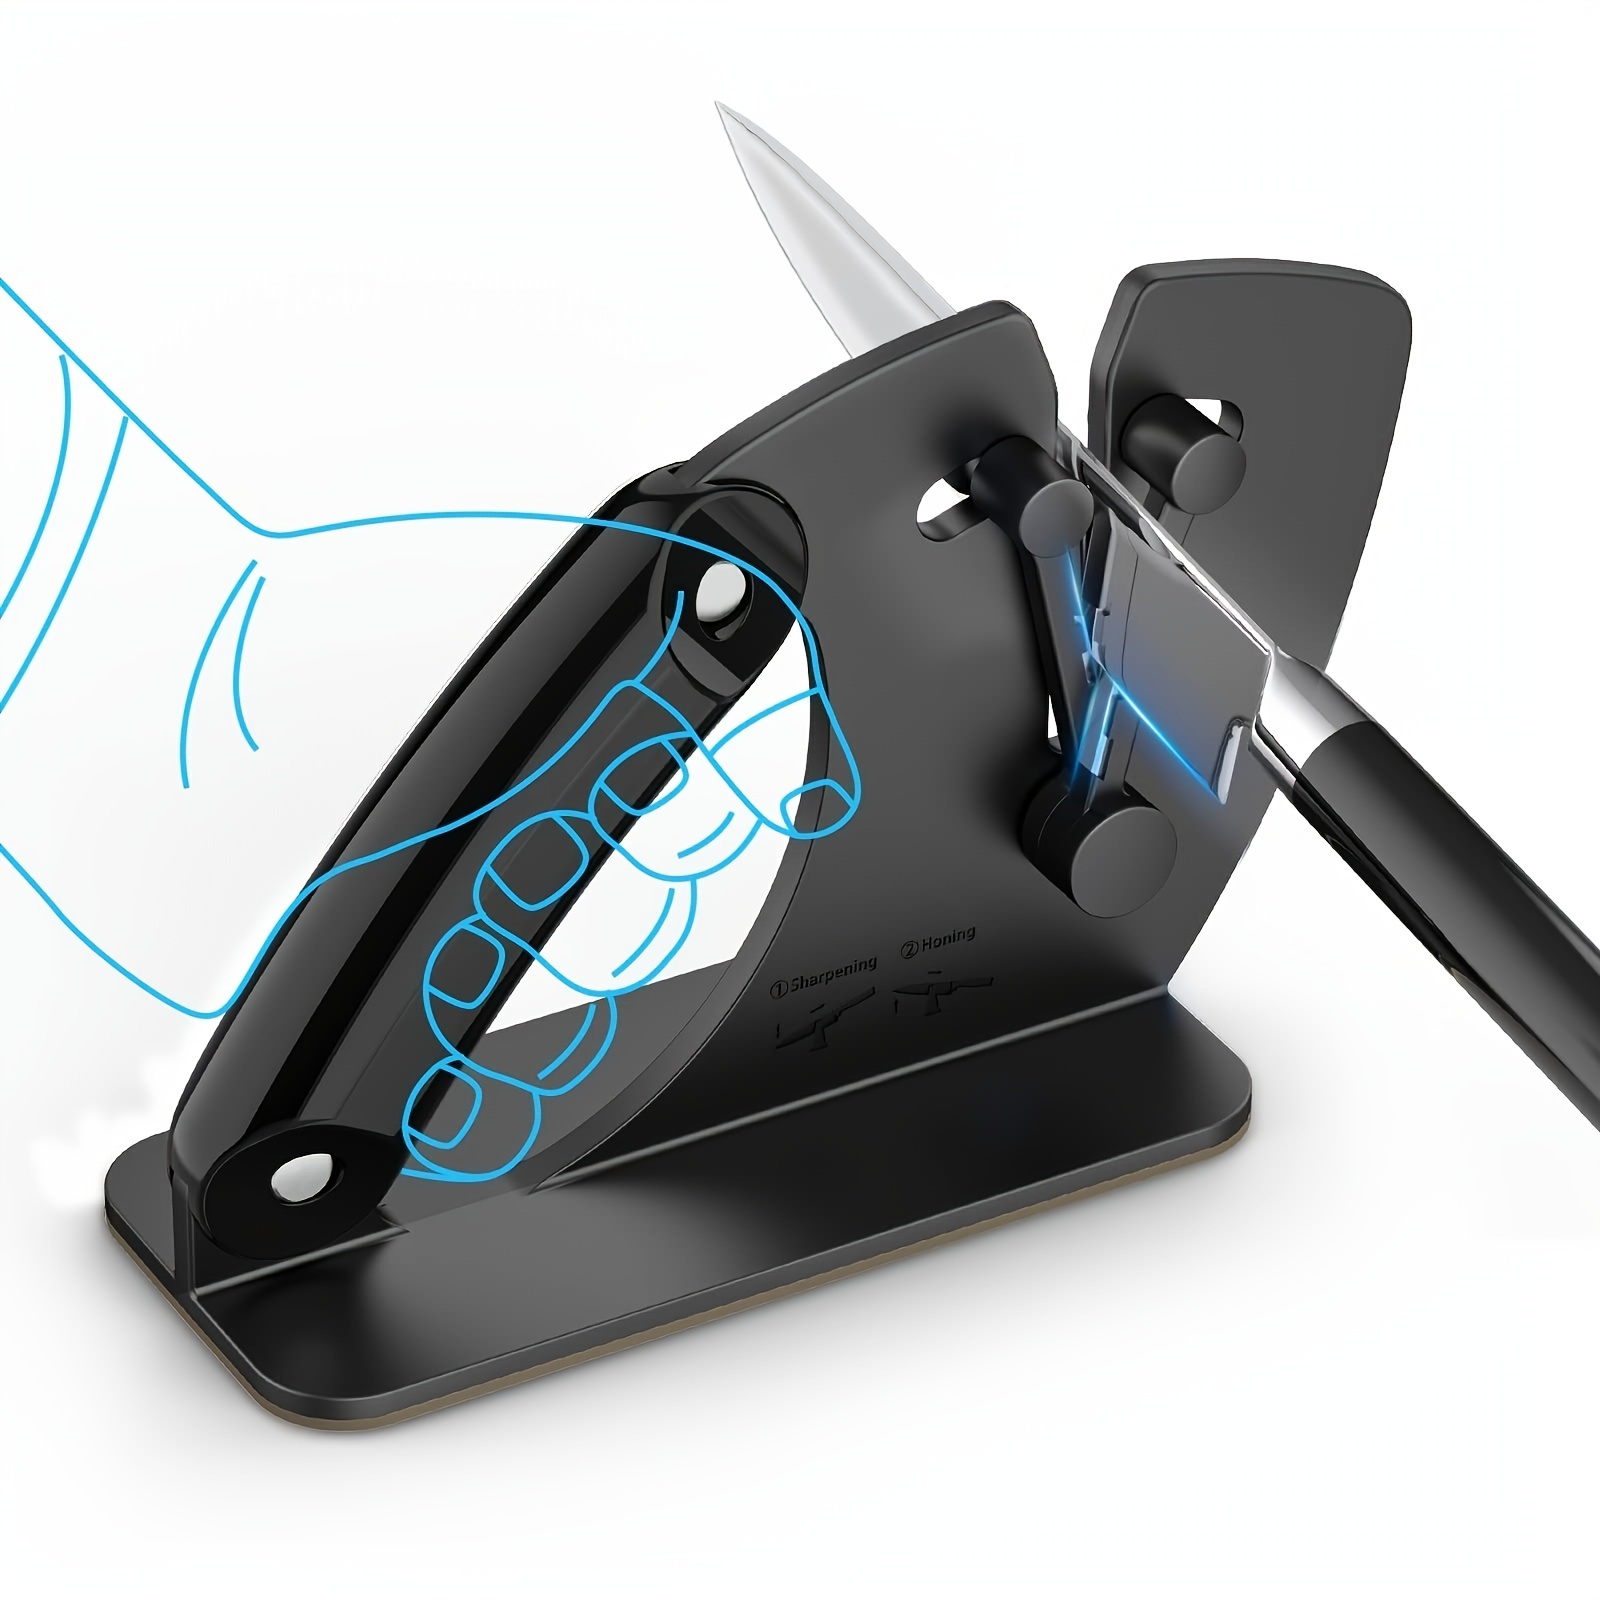 Whetstone Industrial Electric Grinder Knife Device Single - Temu